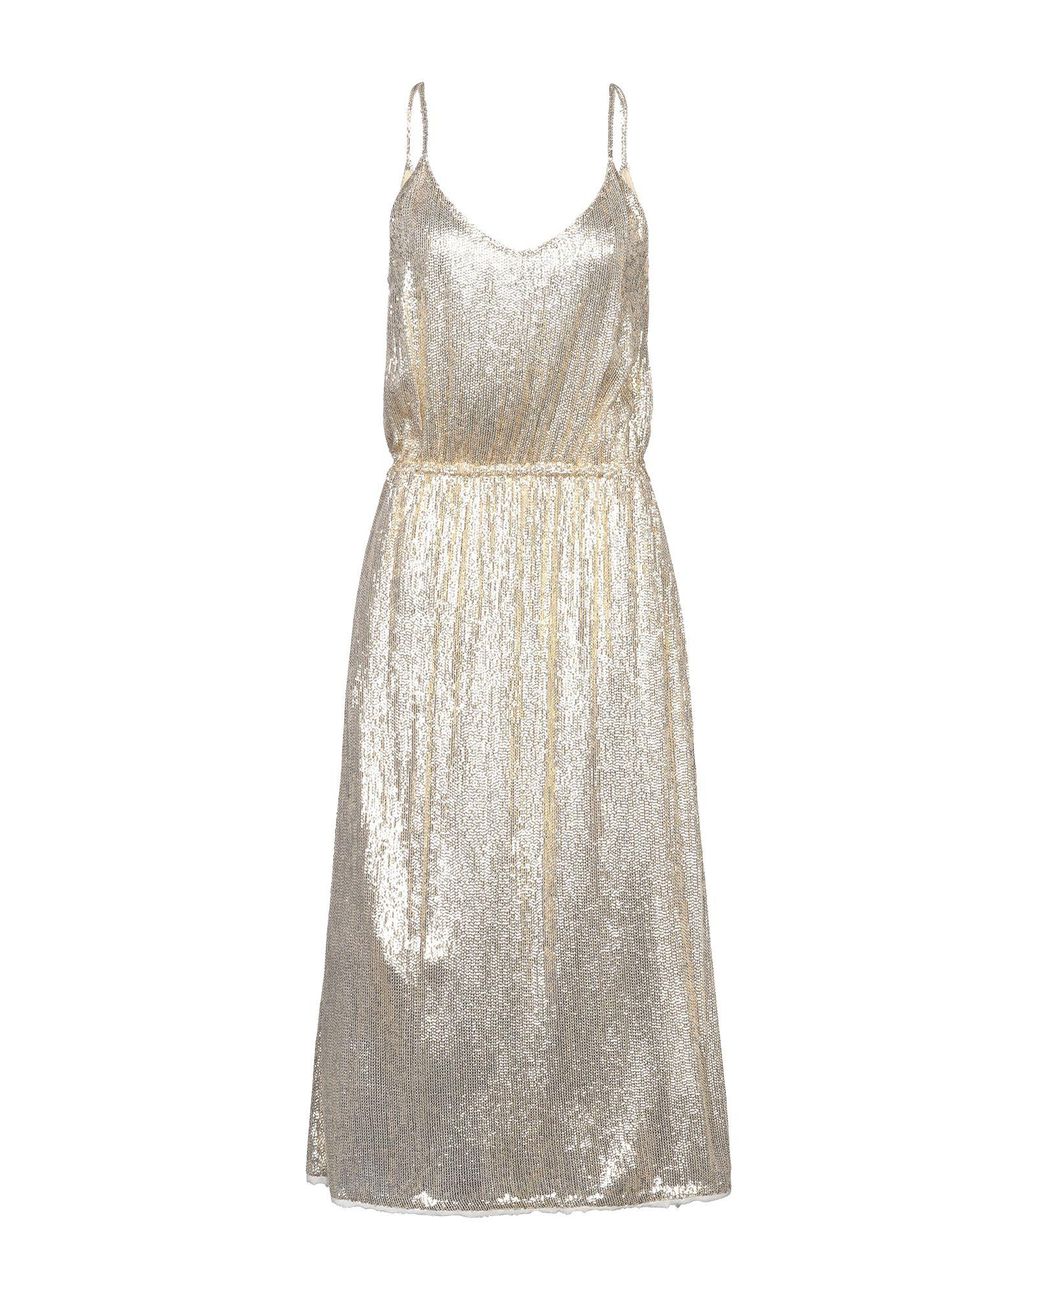 Mes Demoiselles Synthetic 3/4 Length Dress in Gold (Metallic) - Lyst